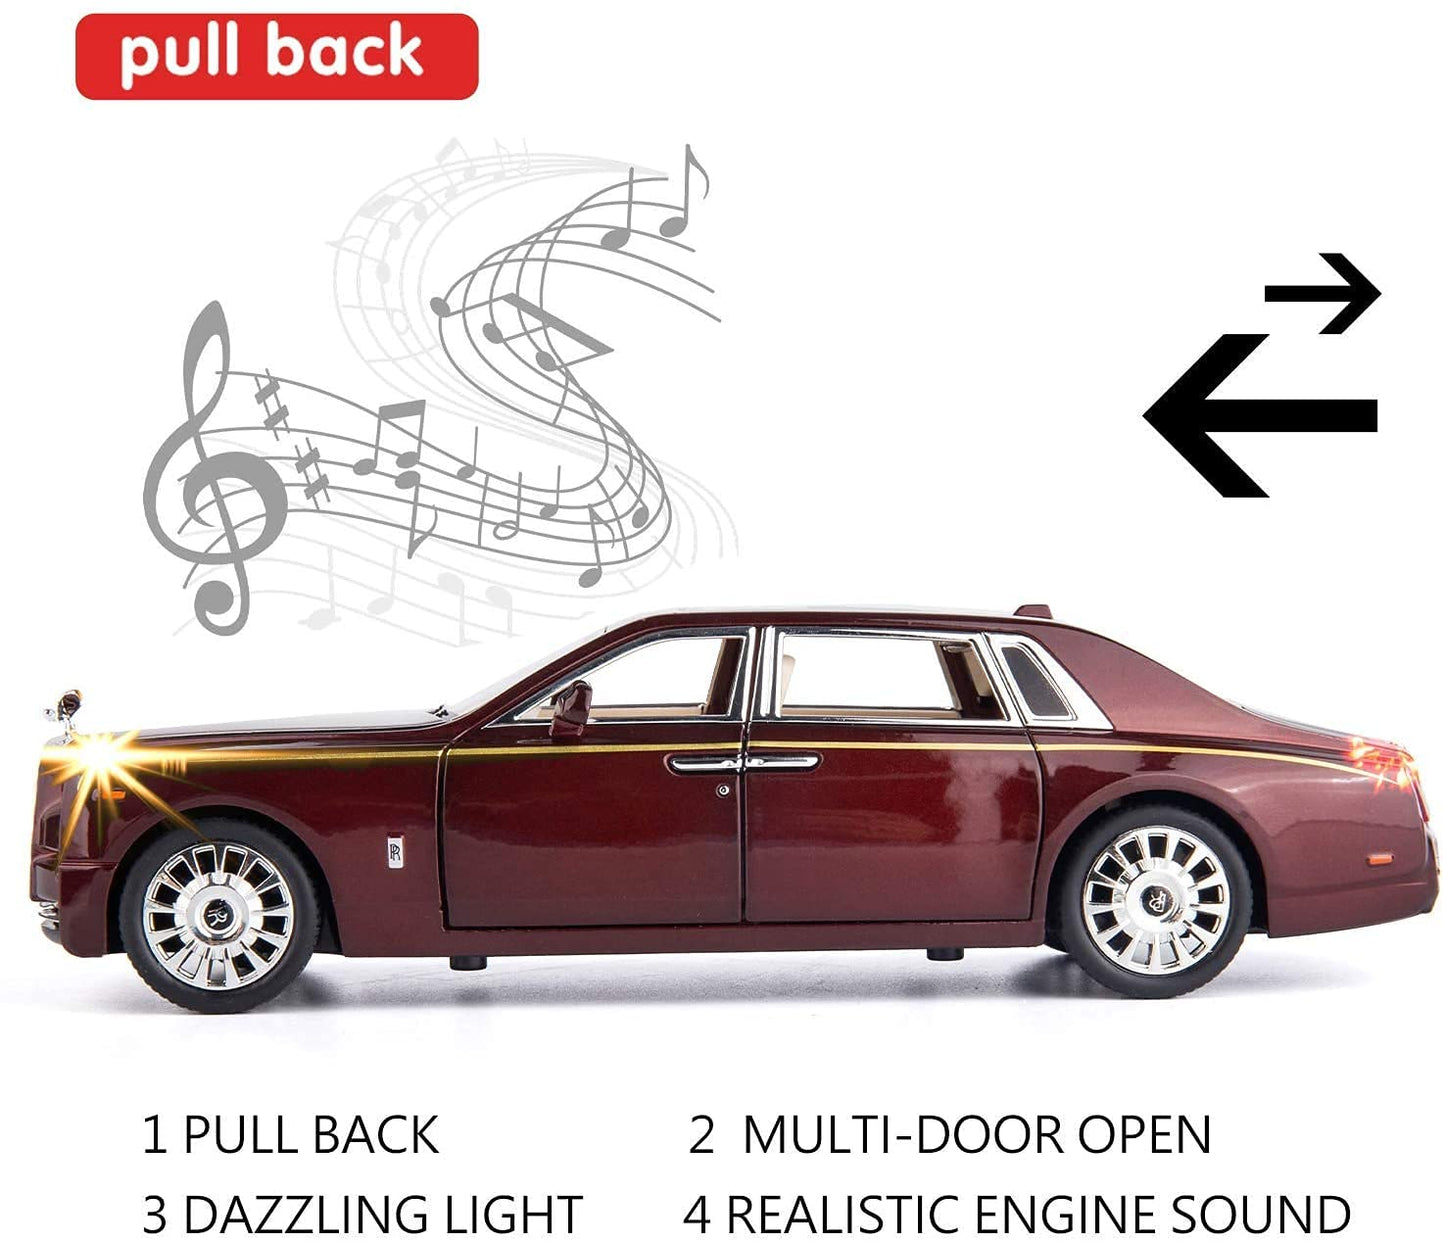 Rolls Royce Model 1:24 Scale Model Die cast Metal Pullback Toy car with Openable Doors & Light(Blue)